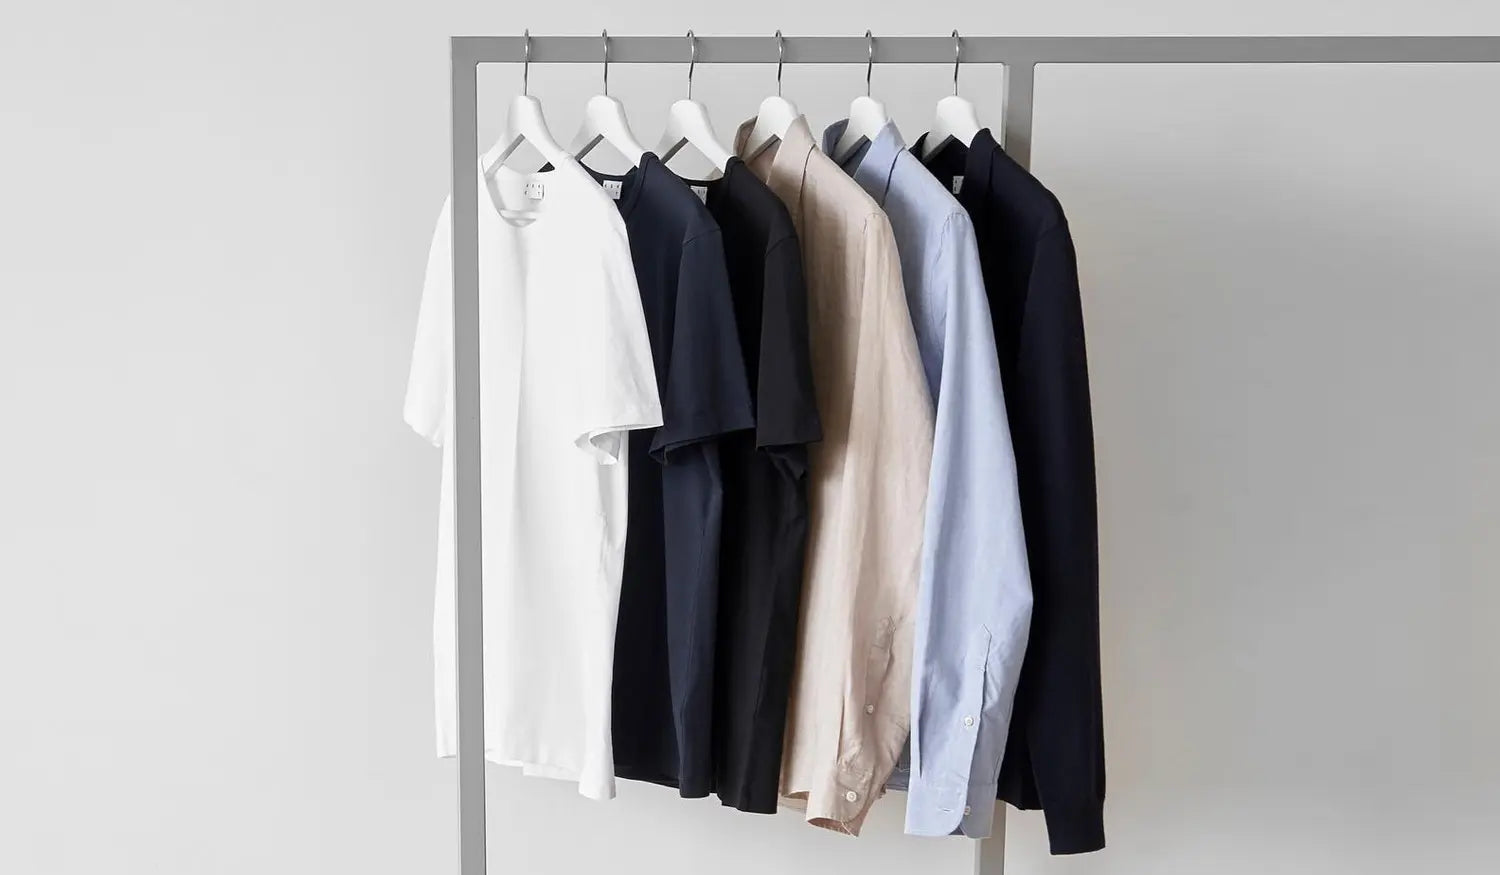 How to Build a Minimalist Men's Wardrobe?